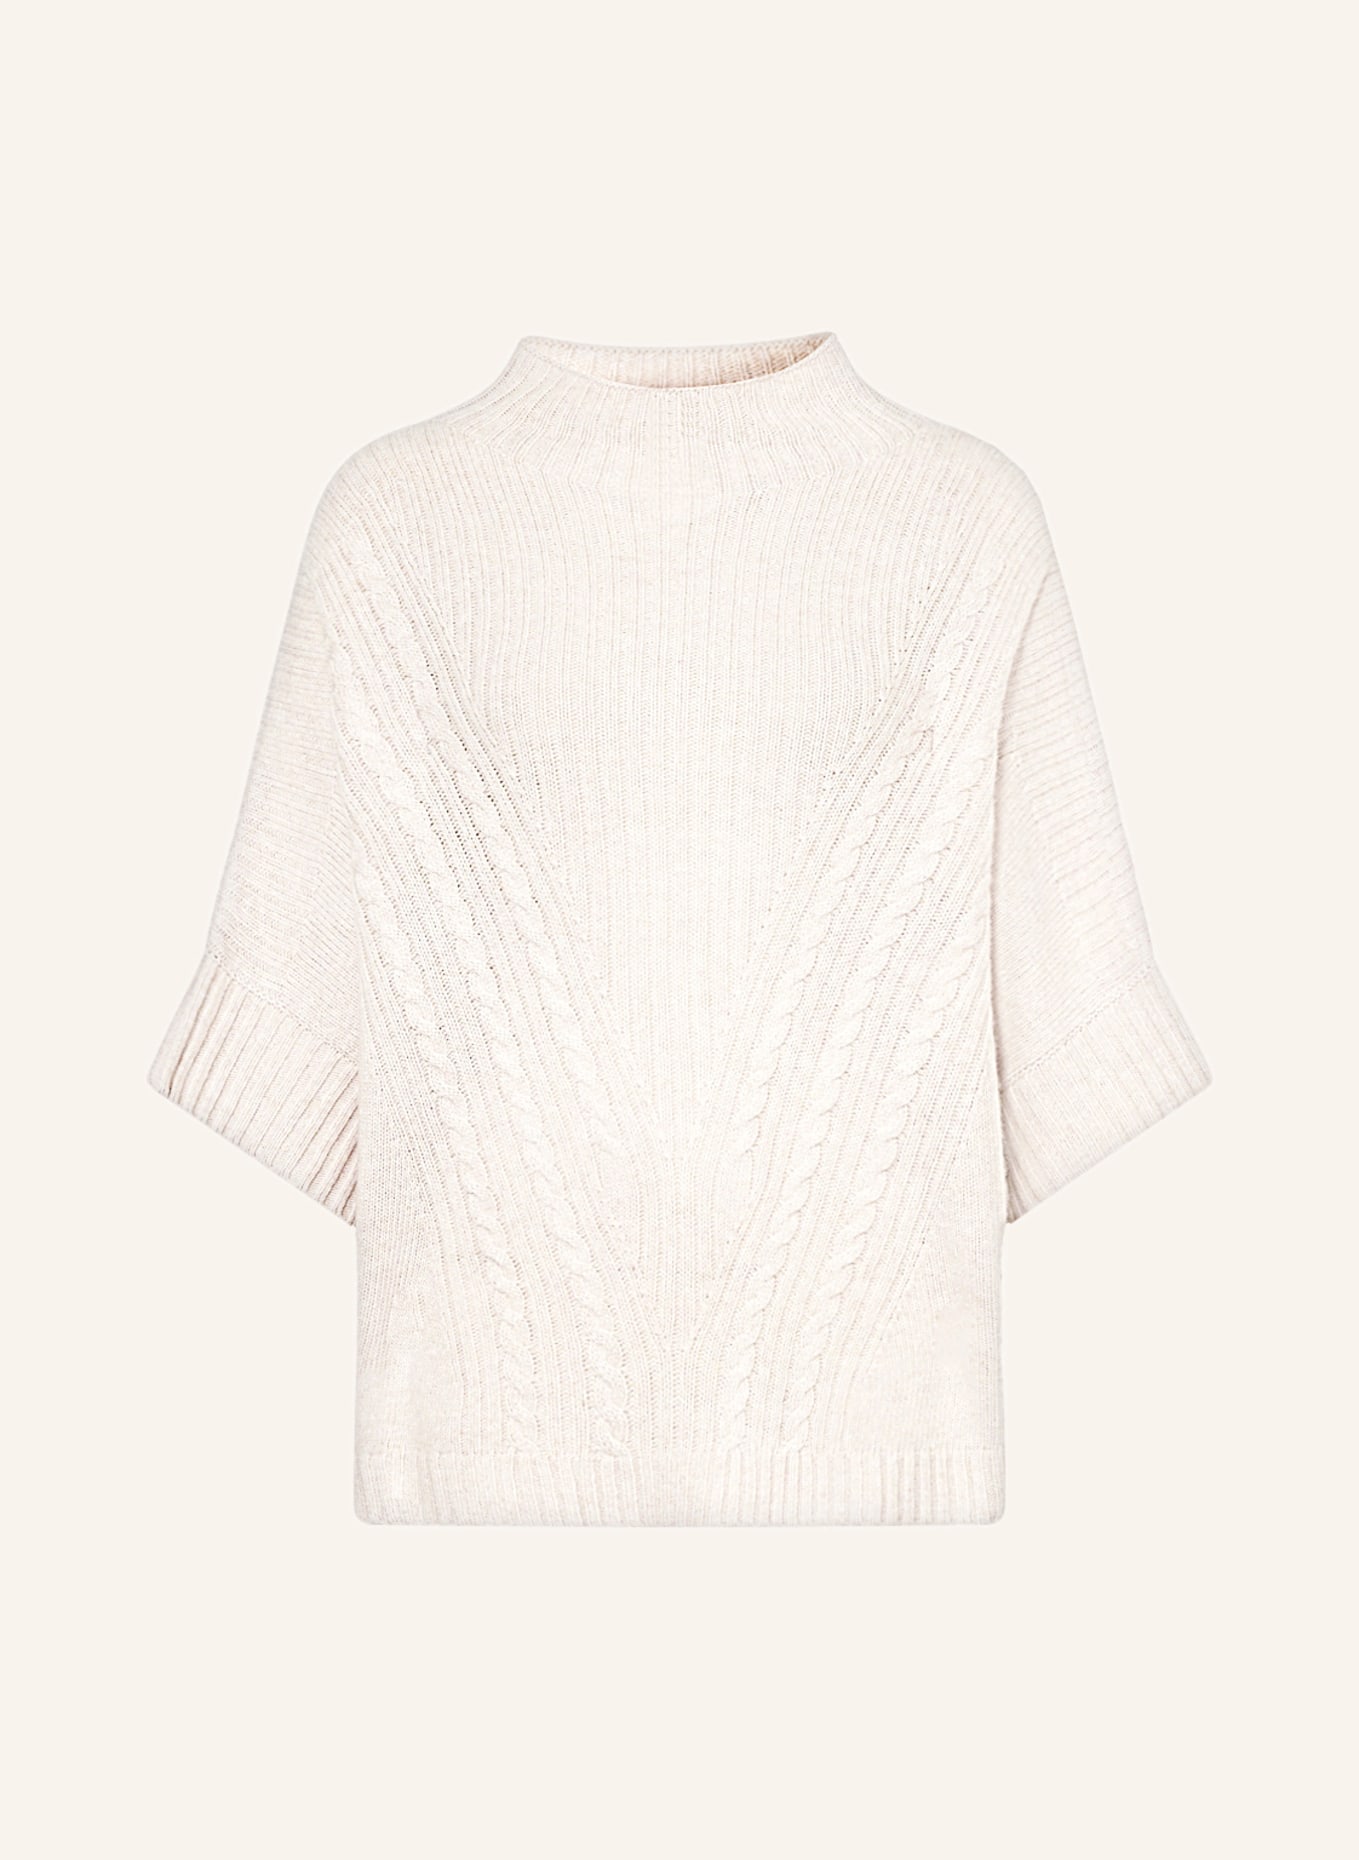 REPEAT Sweater made of merino wool, Color: CREAM (Image 1)